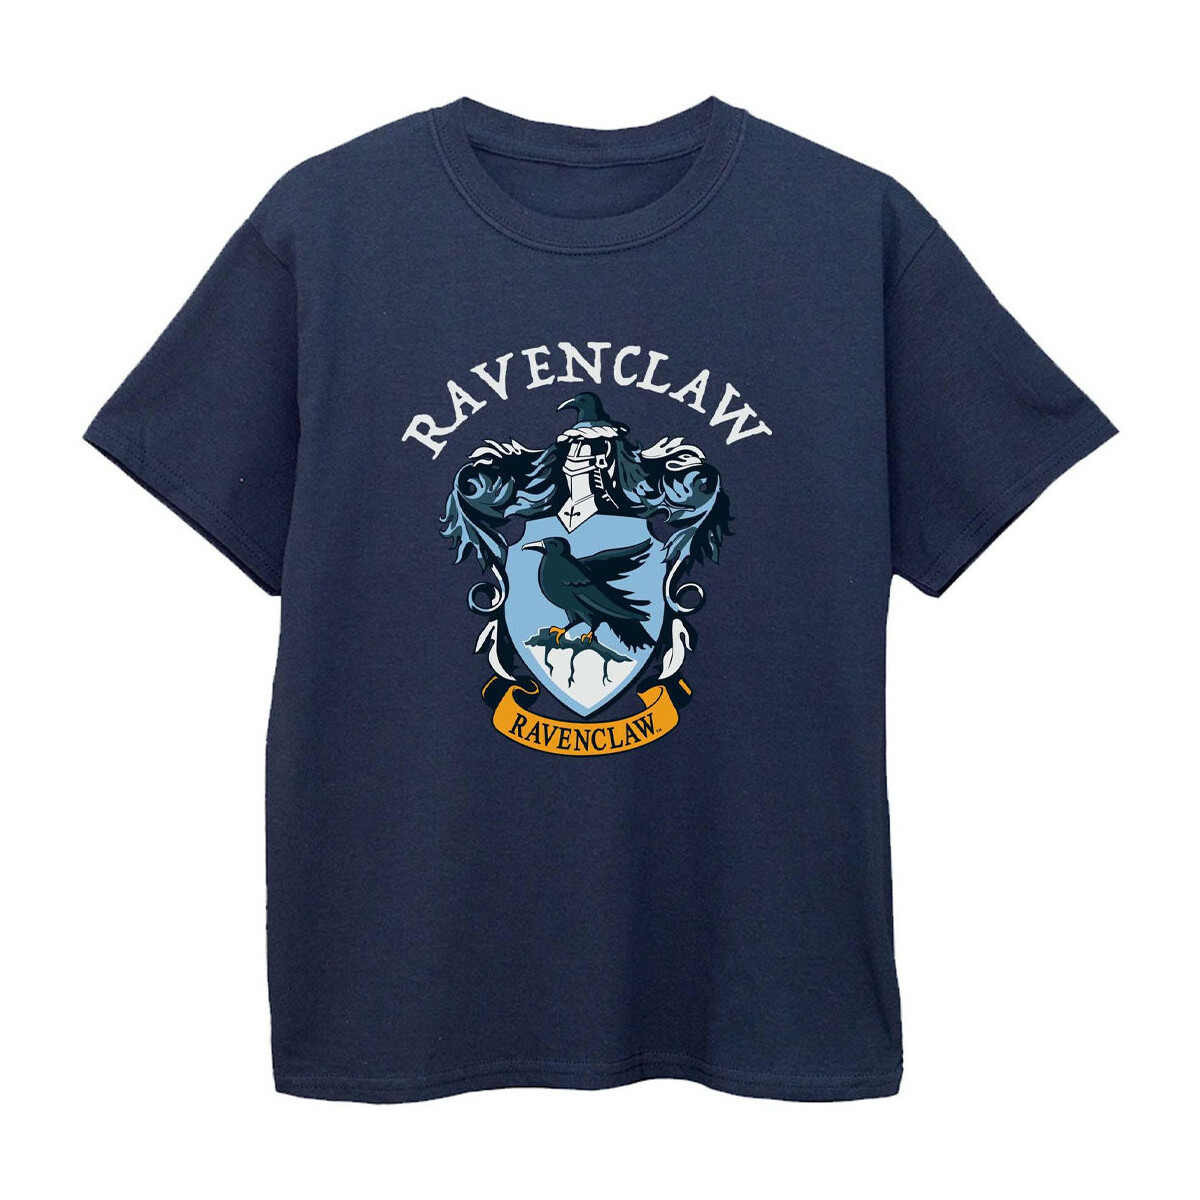 Vêtements Garçon T-shirts manches courtes Harry Potter BI423 Bleu